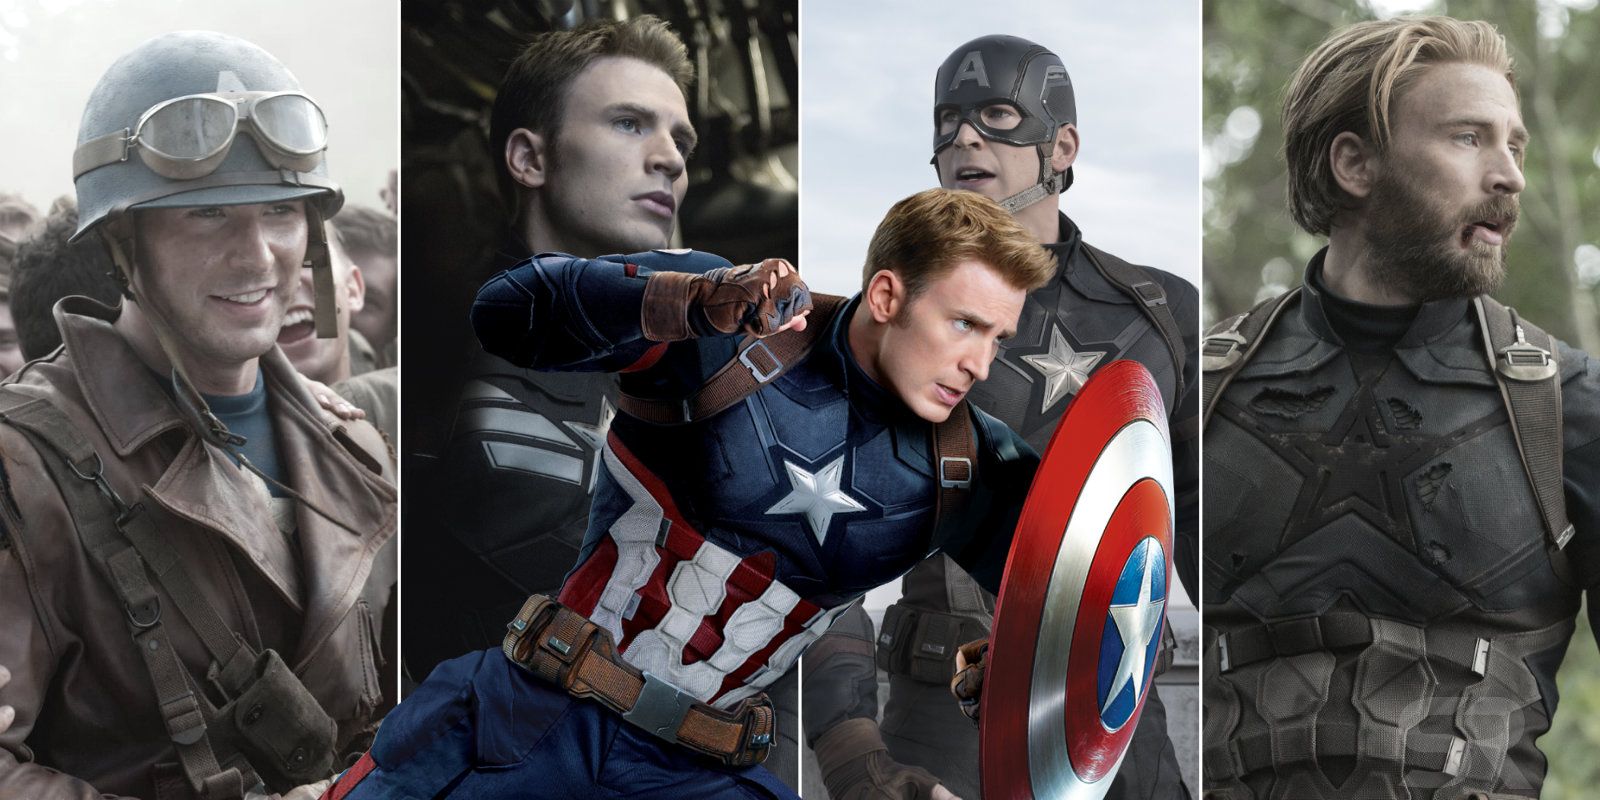 Chris Evans as Captain America in the MCU